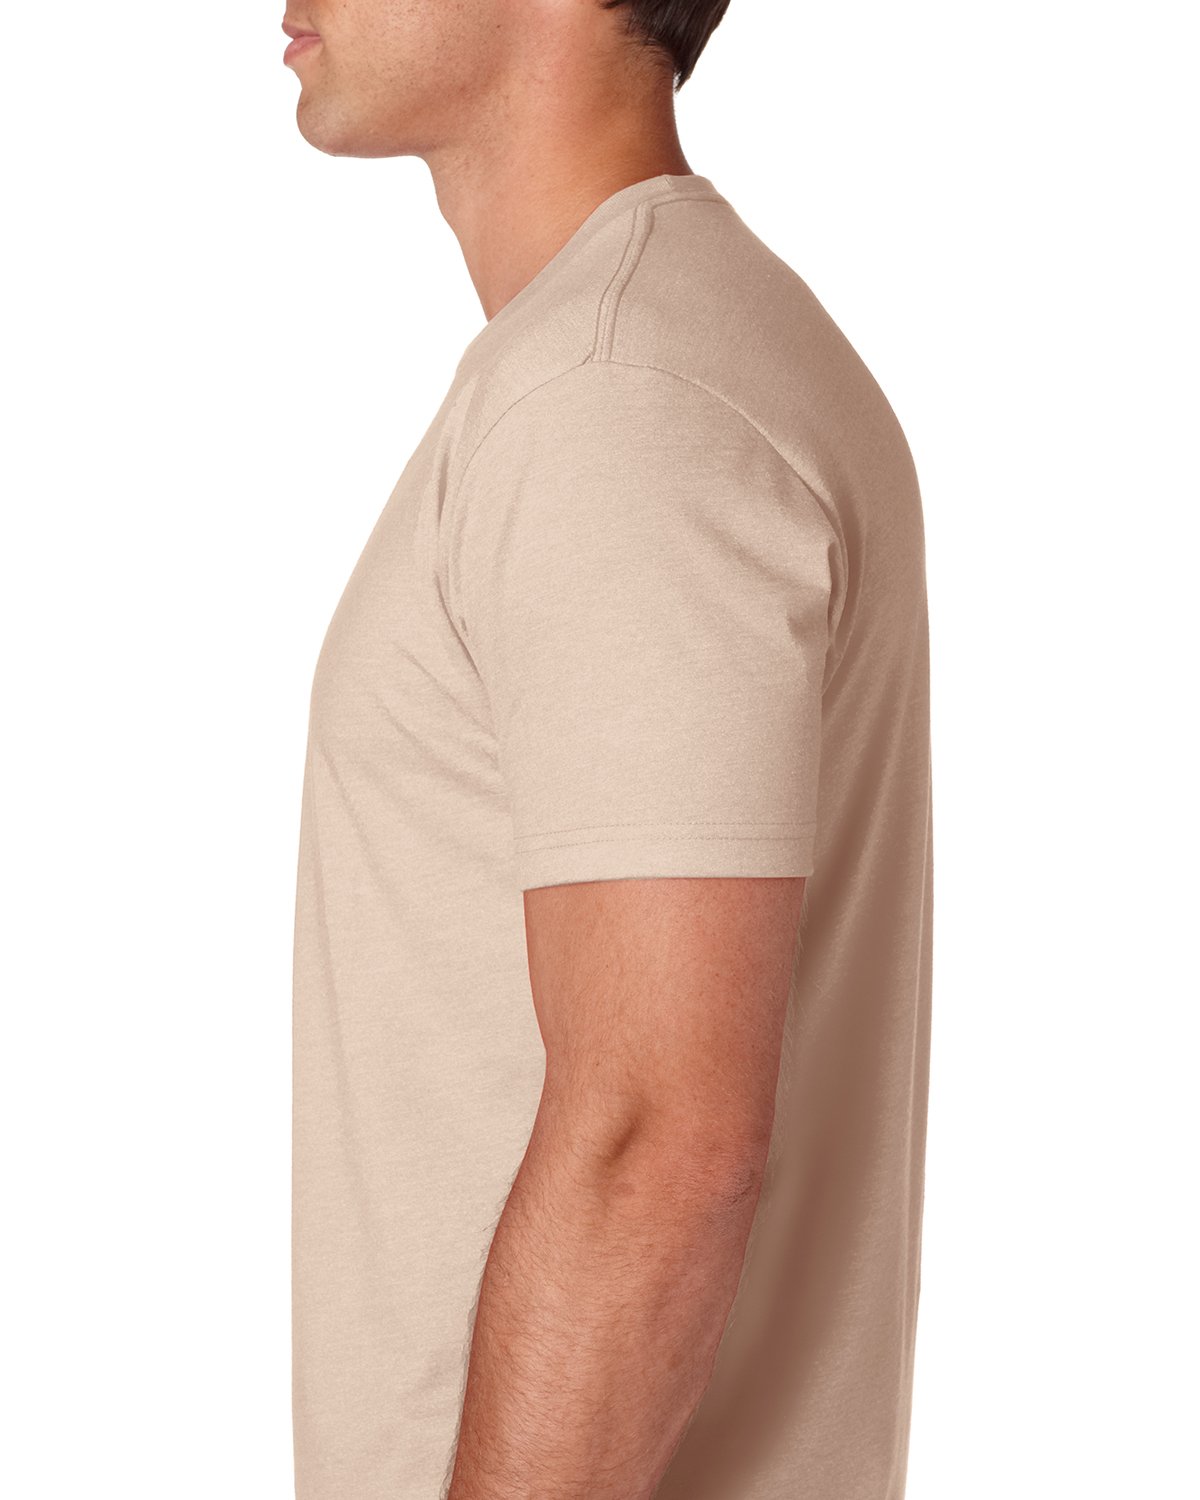 Next Level Apparel Men's Premium Fitted CVC T-Shirt (6210)